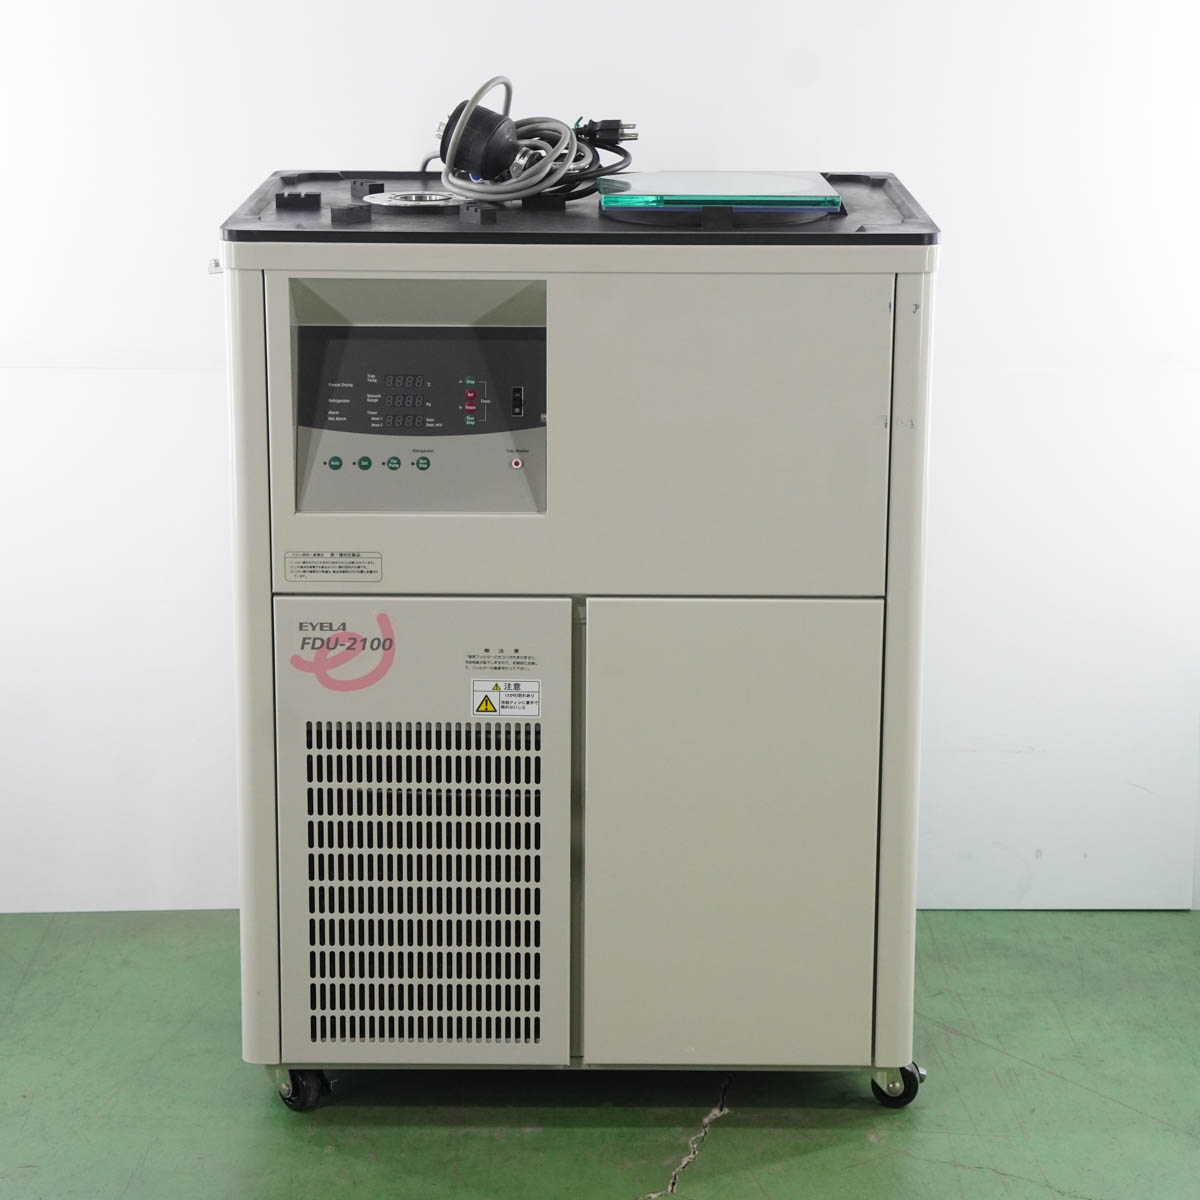 [DW]USED 8日保証 セット EYELA DRC-1000 FDU-2100 ドライチャンバー 凍結乾燥機 単相200V [04690-0088] - 15